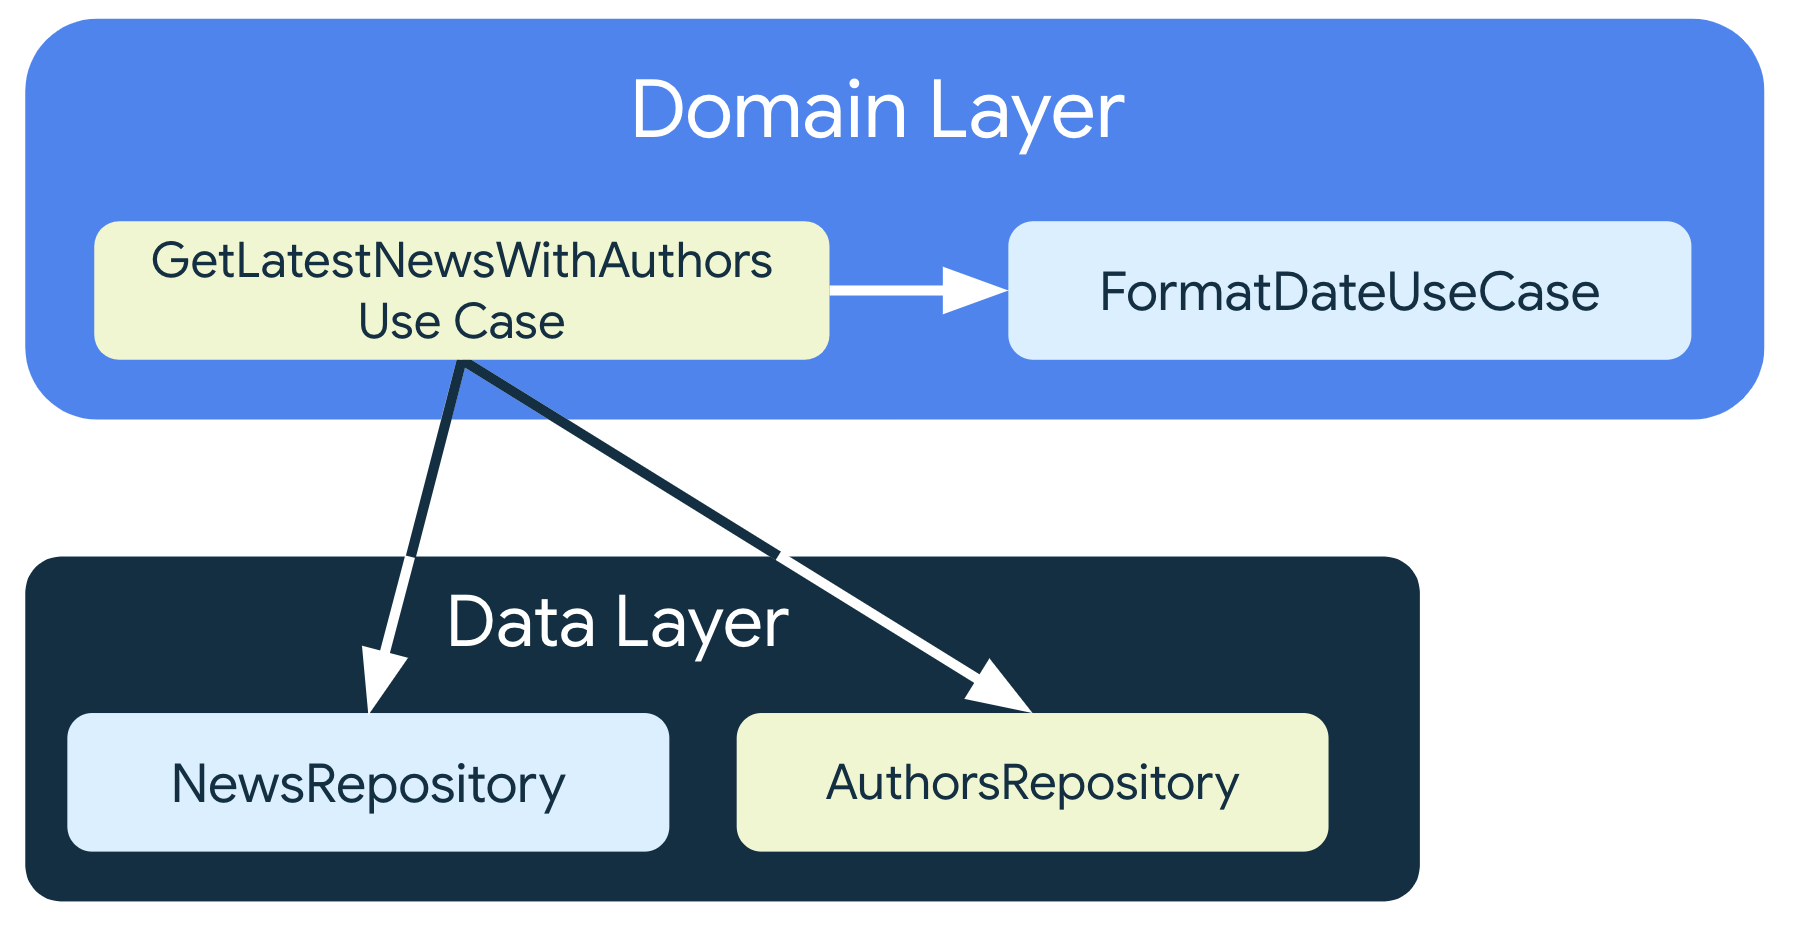 GetLatestNewsWithAuthorsUseCase 取決於
資料層的存放區類別，但也取決於 FormatDataUseCase，
這是同時屬於網域層的另一項用途類別。